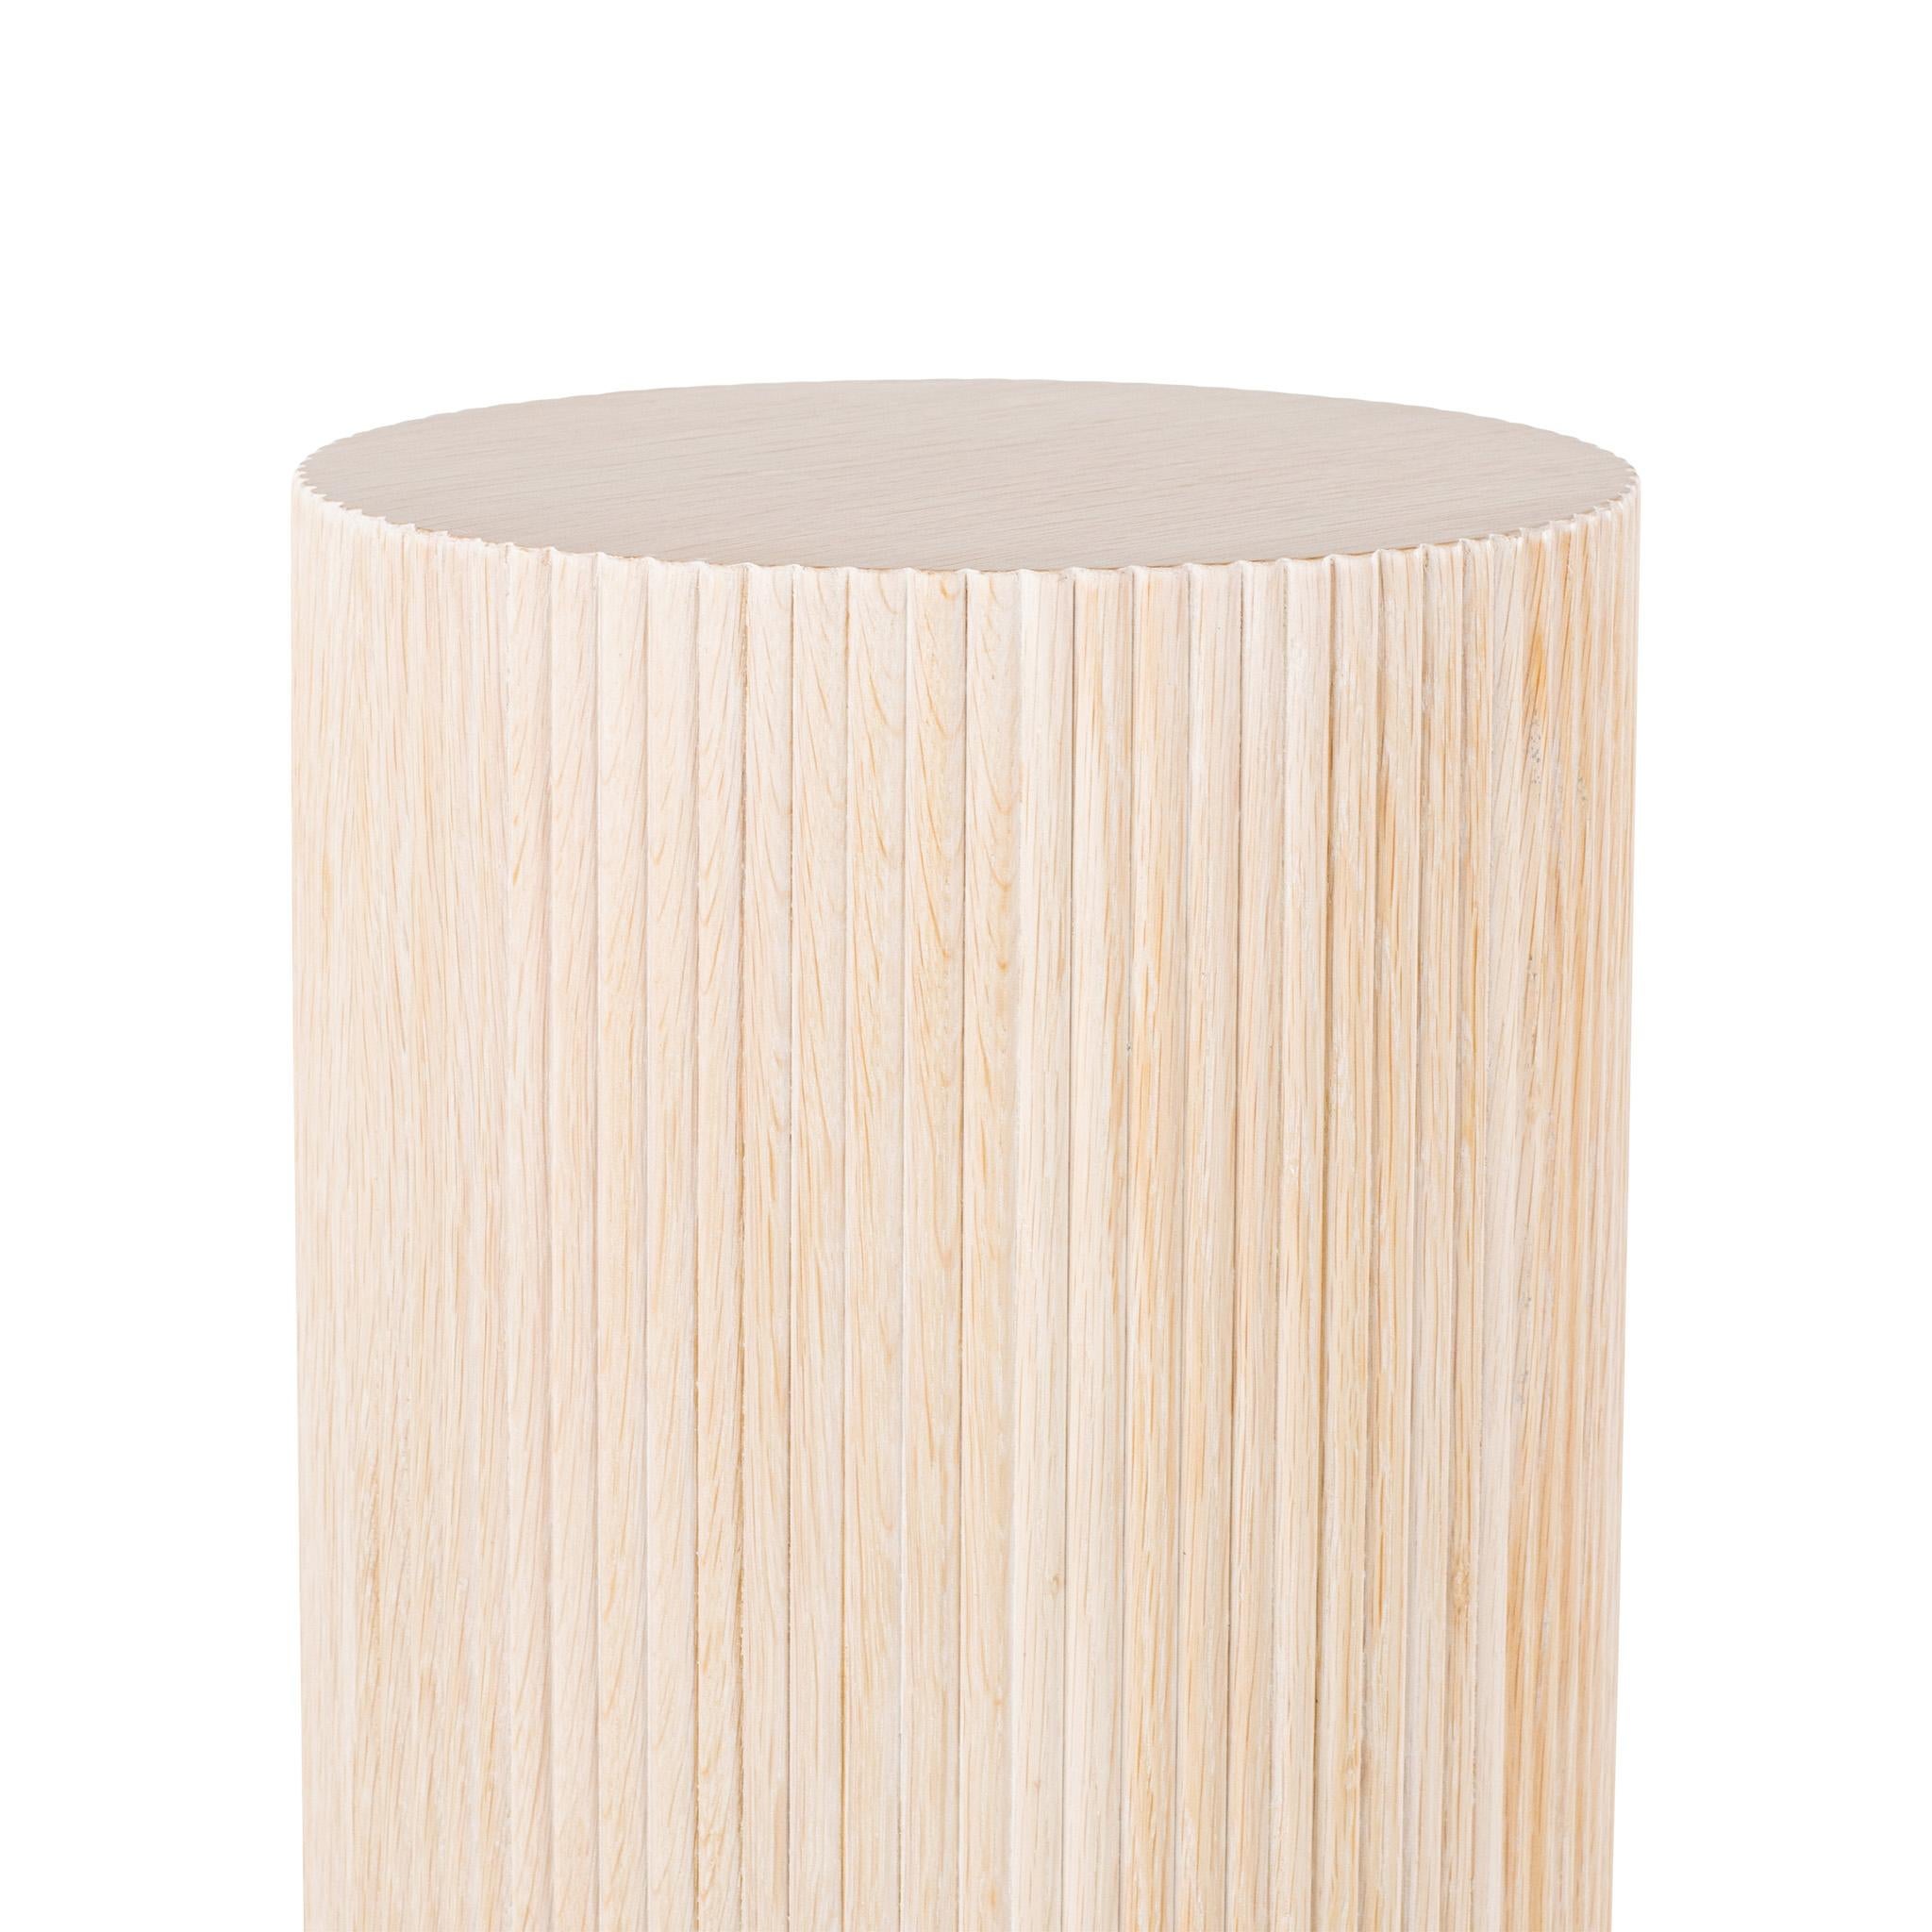 Designed by Josh Greene.
Reeded round pedestal made of oak. 